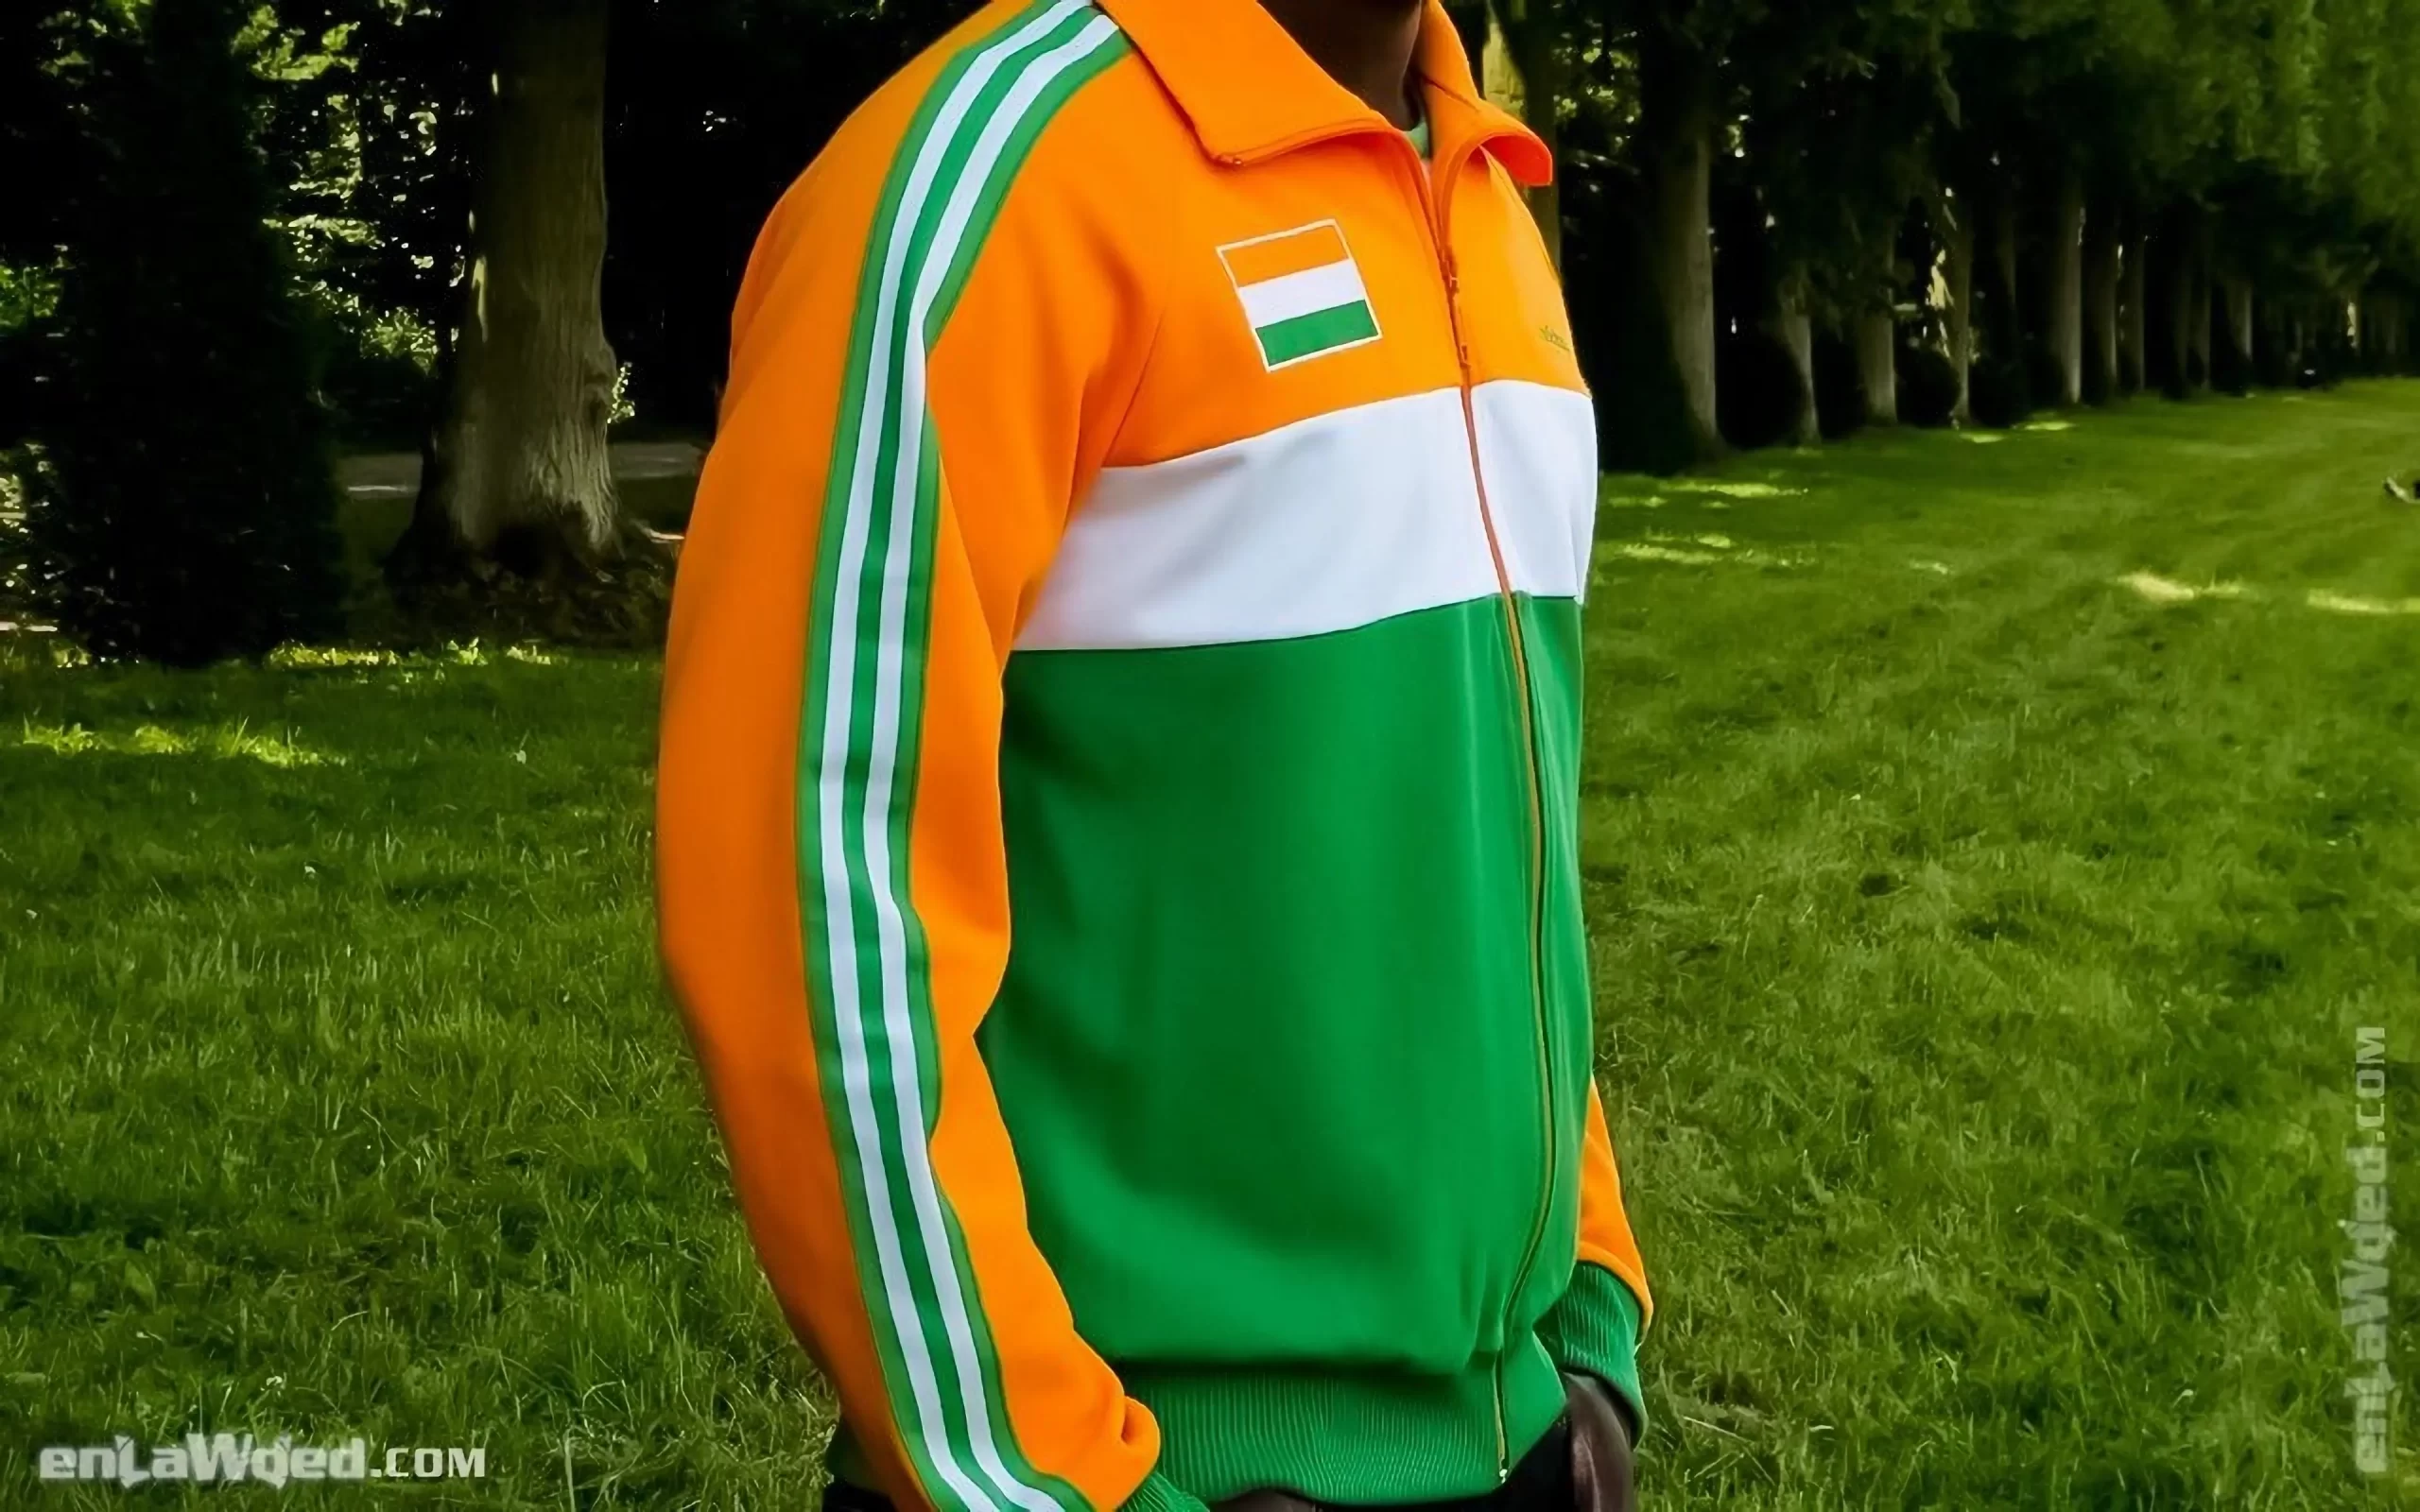 Men’s 2005 India Track Top by Adidas Originals: Jovial (EnLawded.com file #lmcfu49t9kza0naobkw)